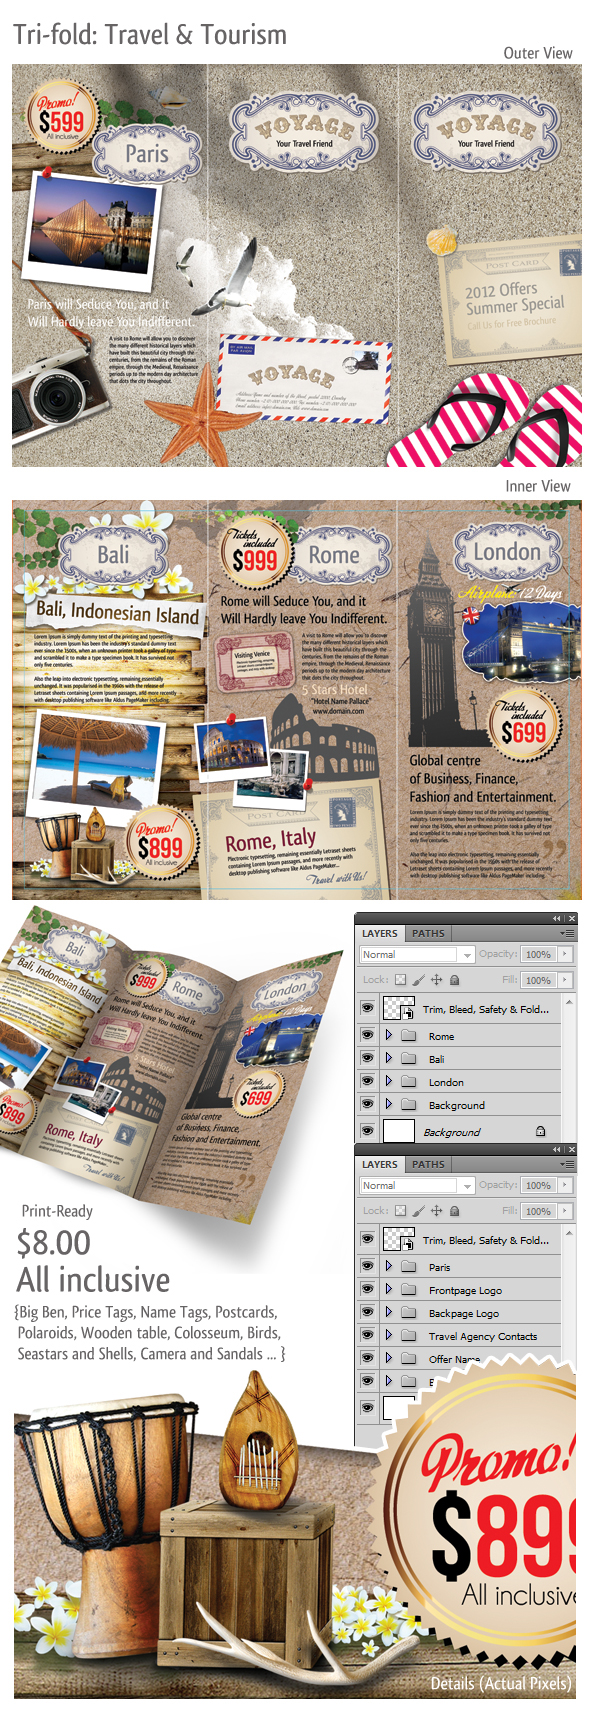 Travel toruism brochure trifold psd tourist agency voyage Paris London bali Rome airplane vacation